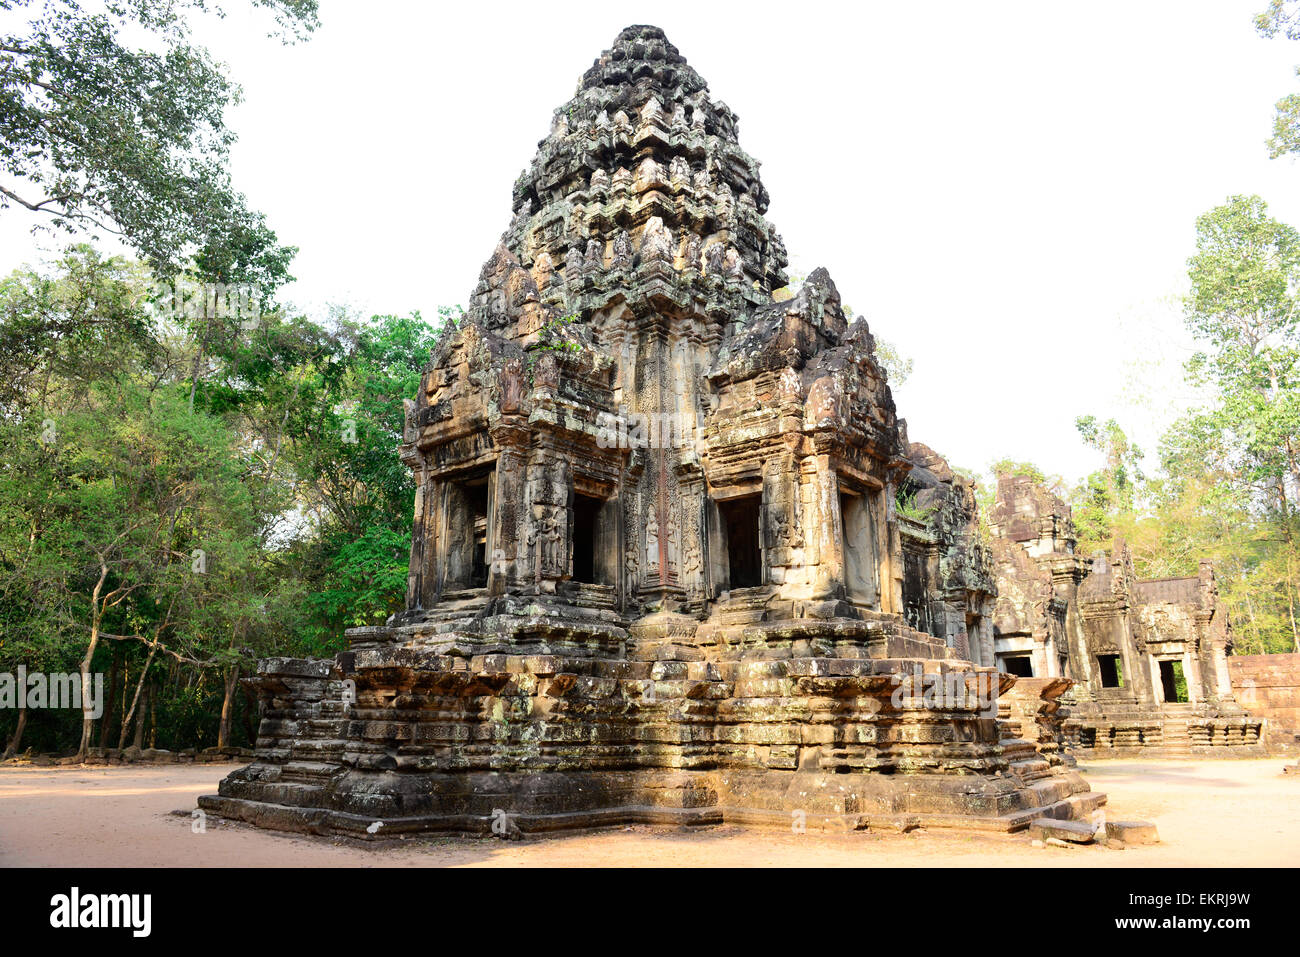 Alten Khmer-Tempel in der Tempelanlage Angkor Wat in Siem Reap, Kambodscha. Stockfoto